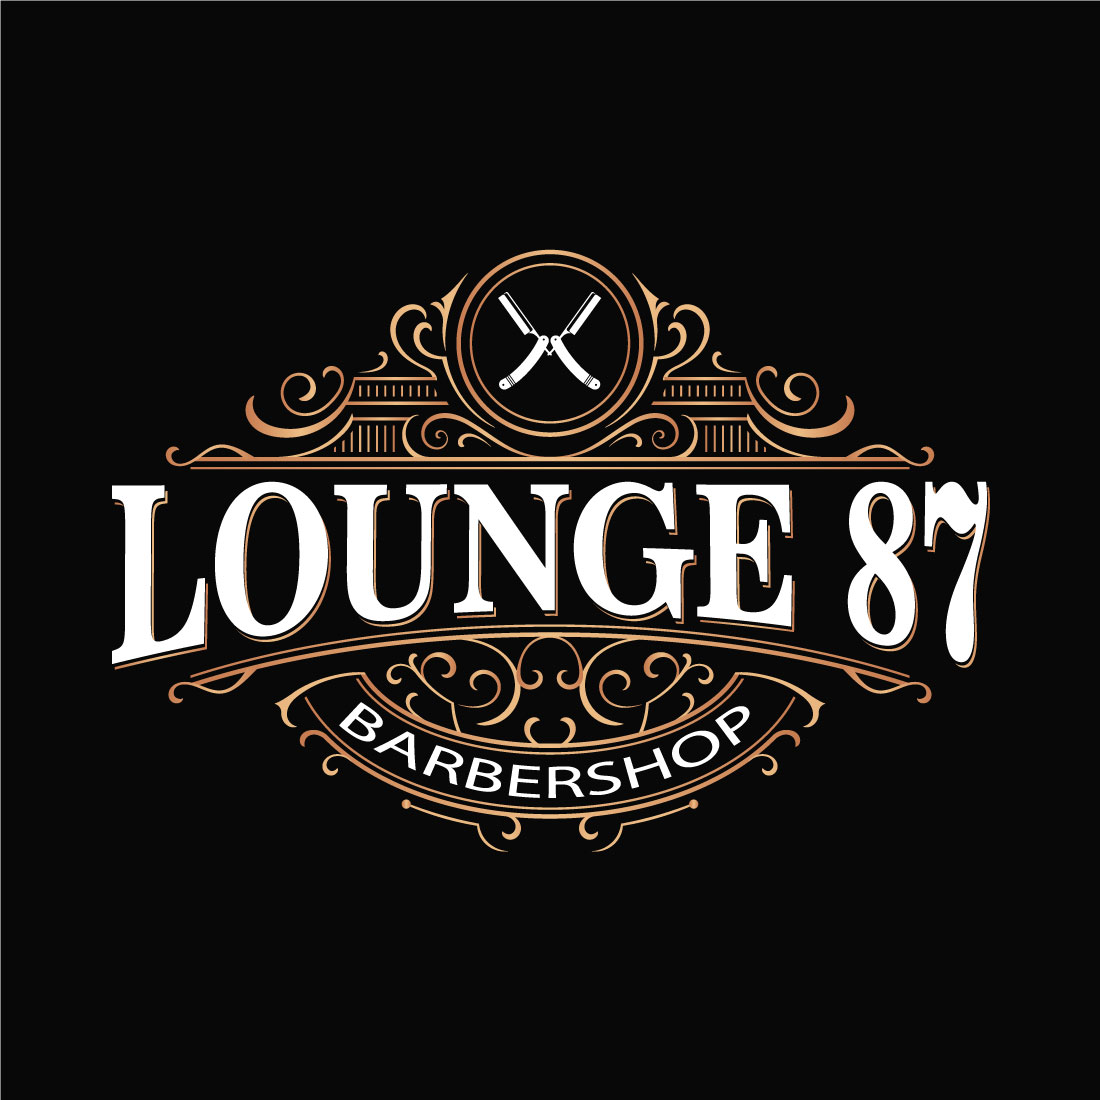 Lounge 87 : Brand Short Description Type Here.